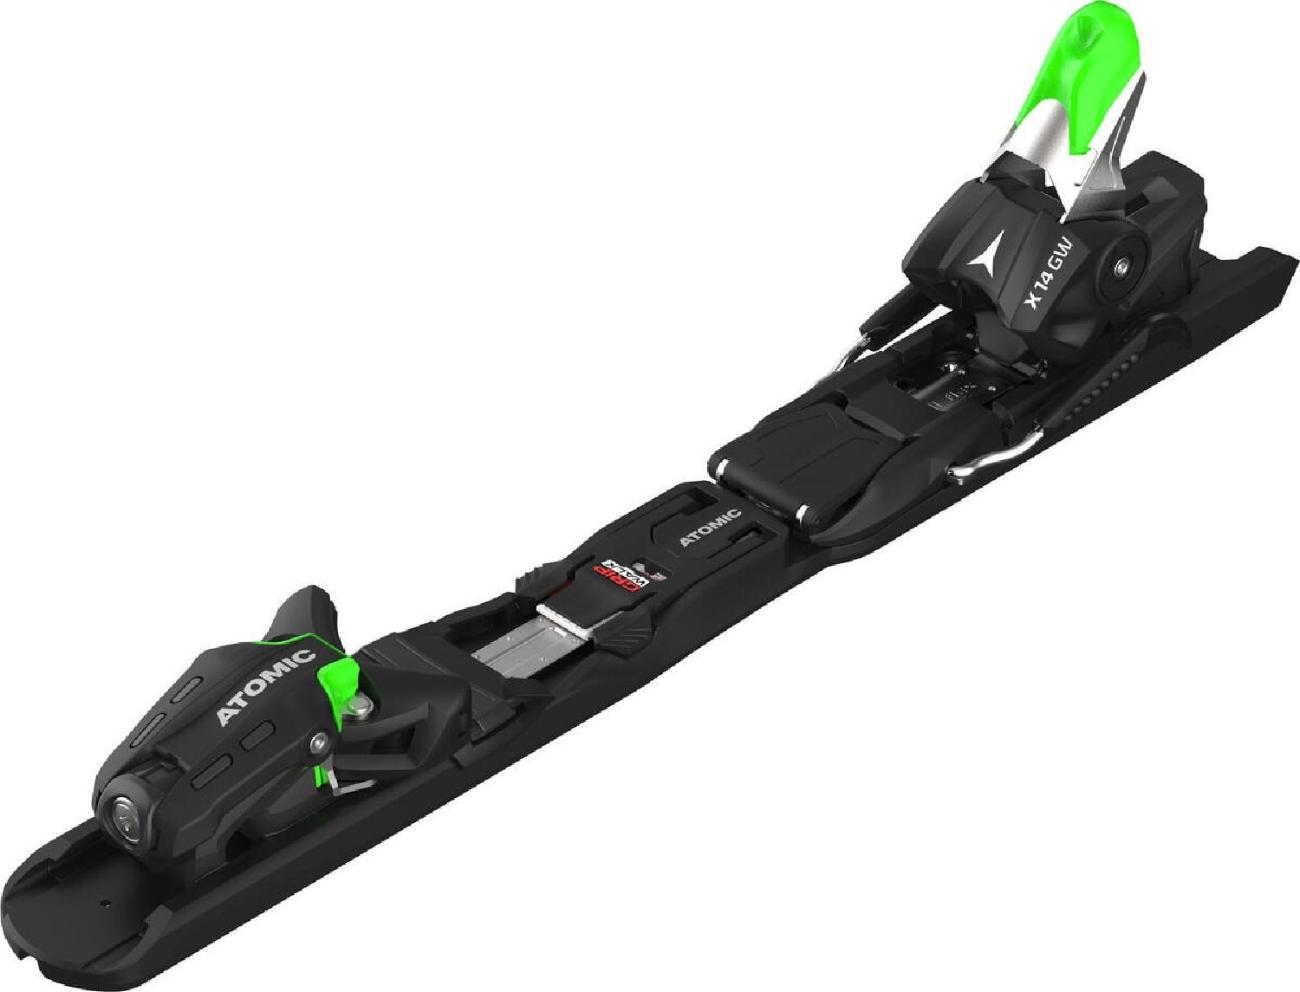 Redster X9 S Skis with Bindings - Men's - 2020/2021 Atomic